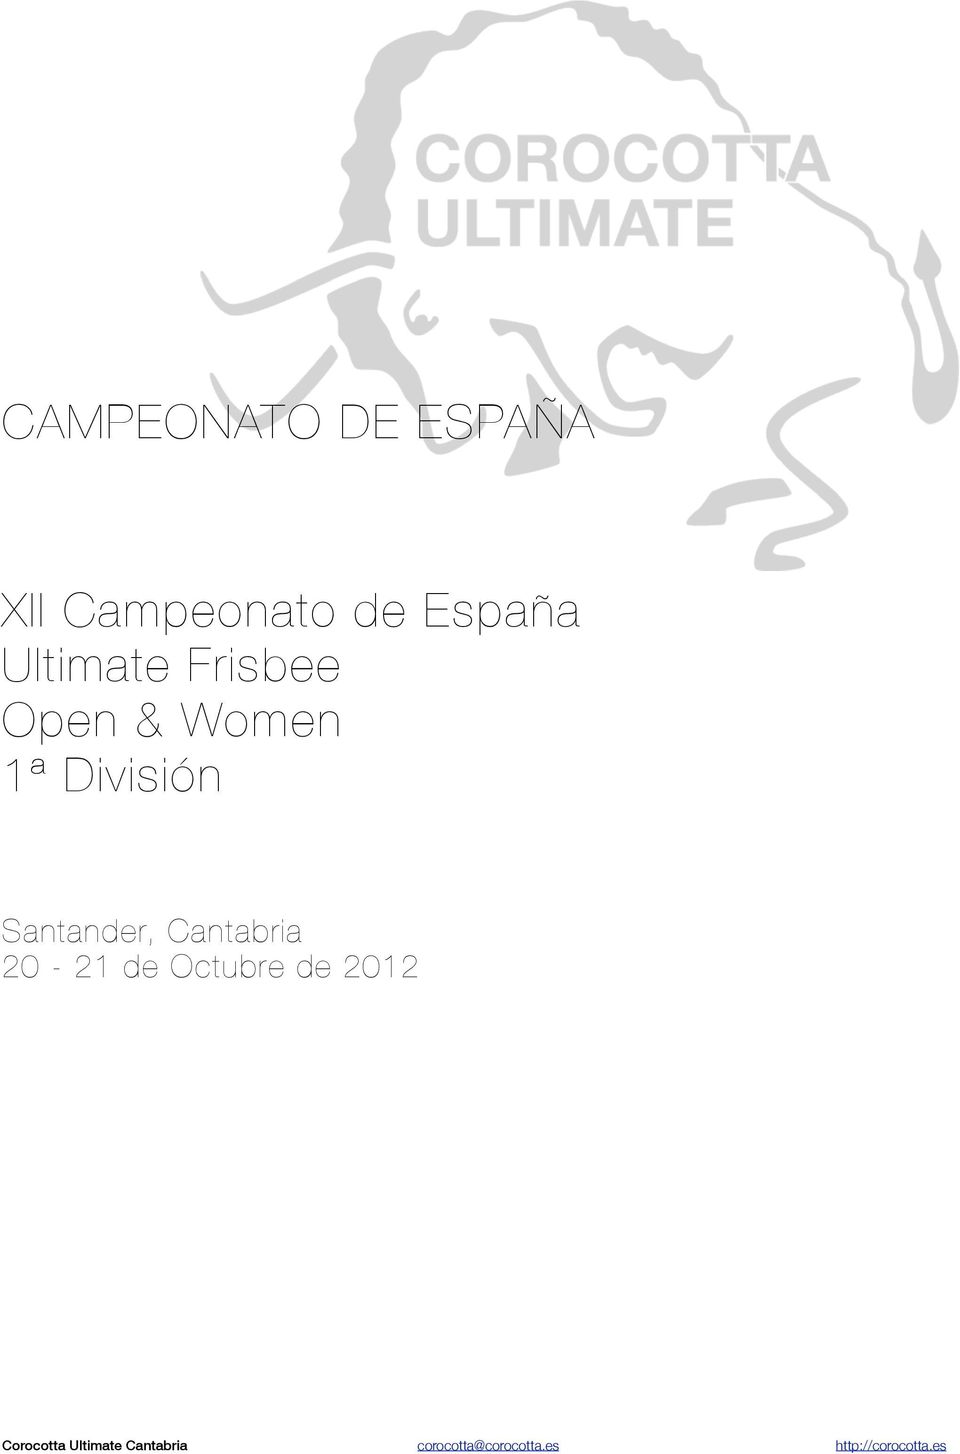 Santander, Cantabria 20-21 de Octubre de 2012